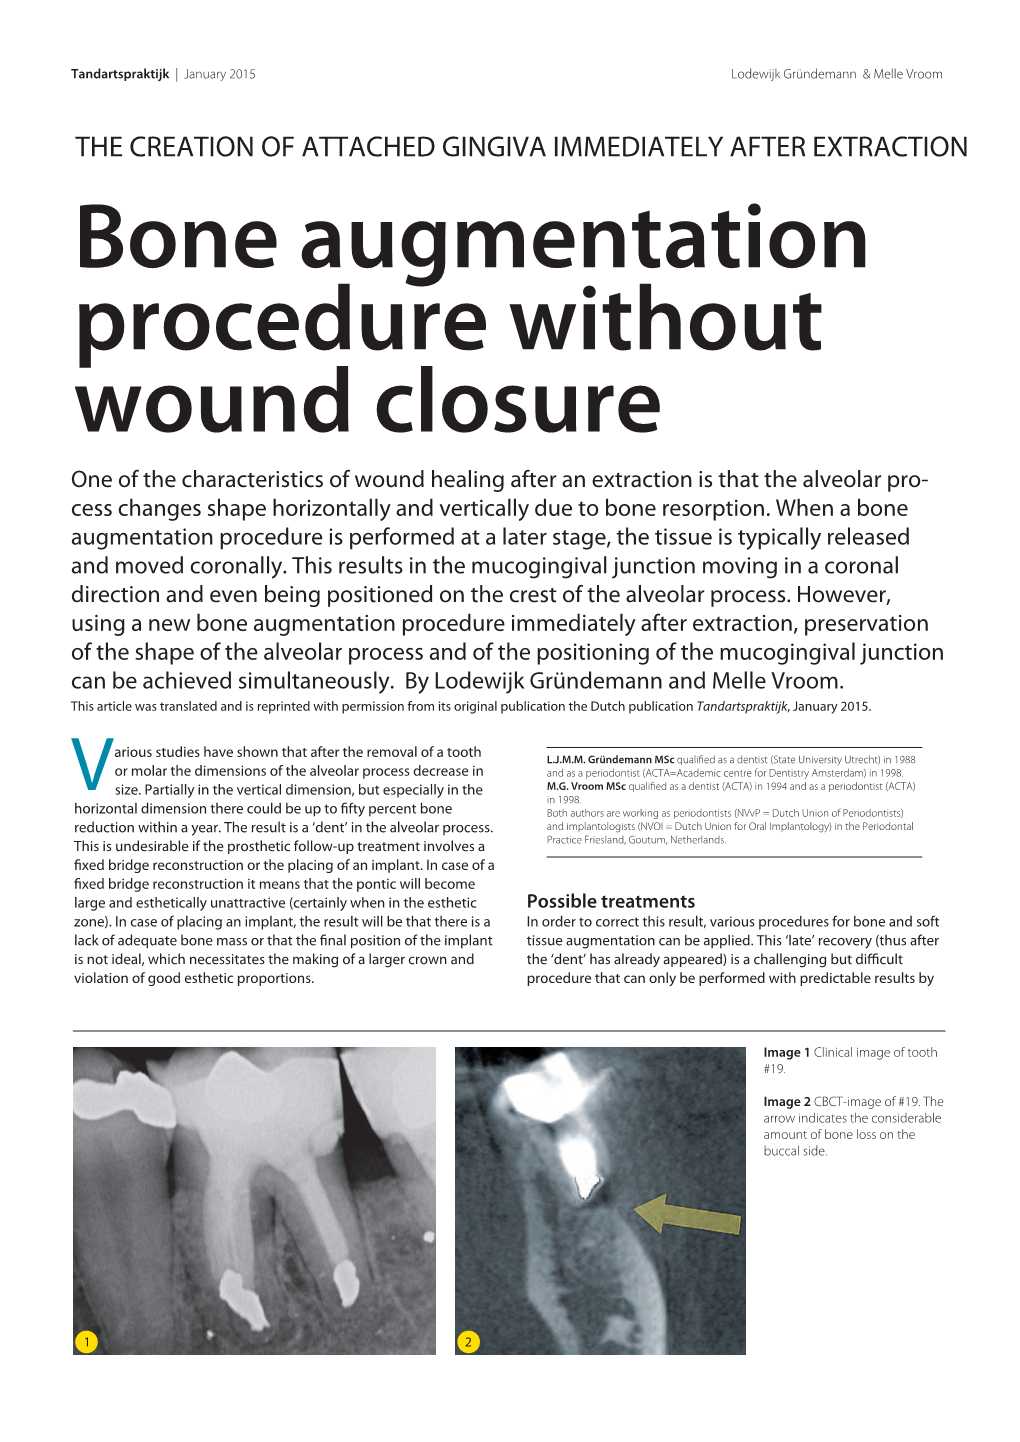 Bone Augmentation Procedure Without Wound Closure